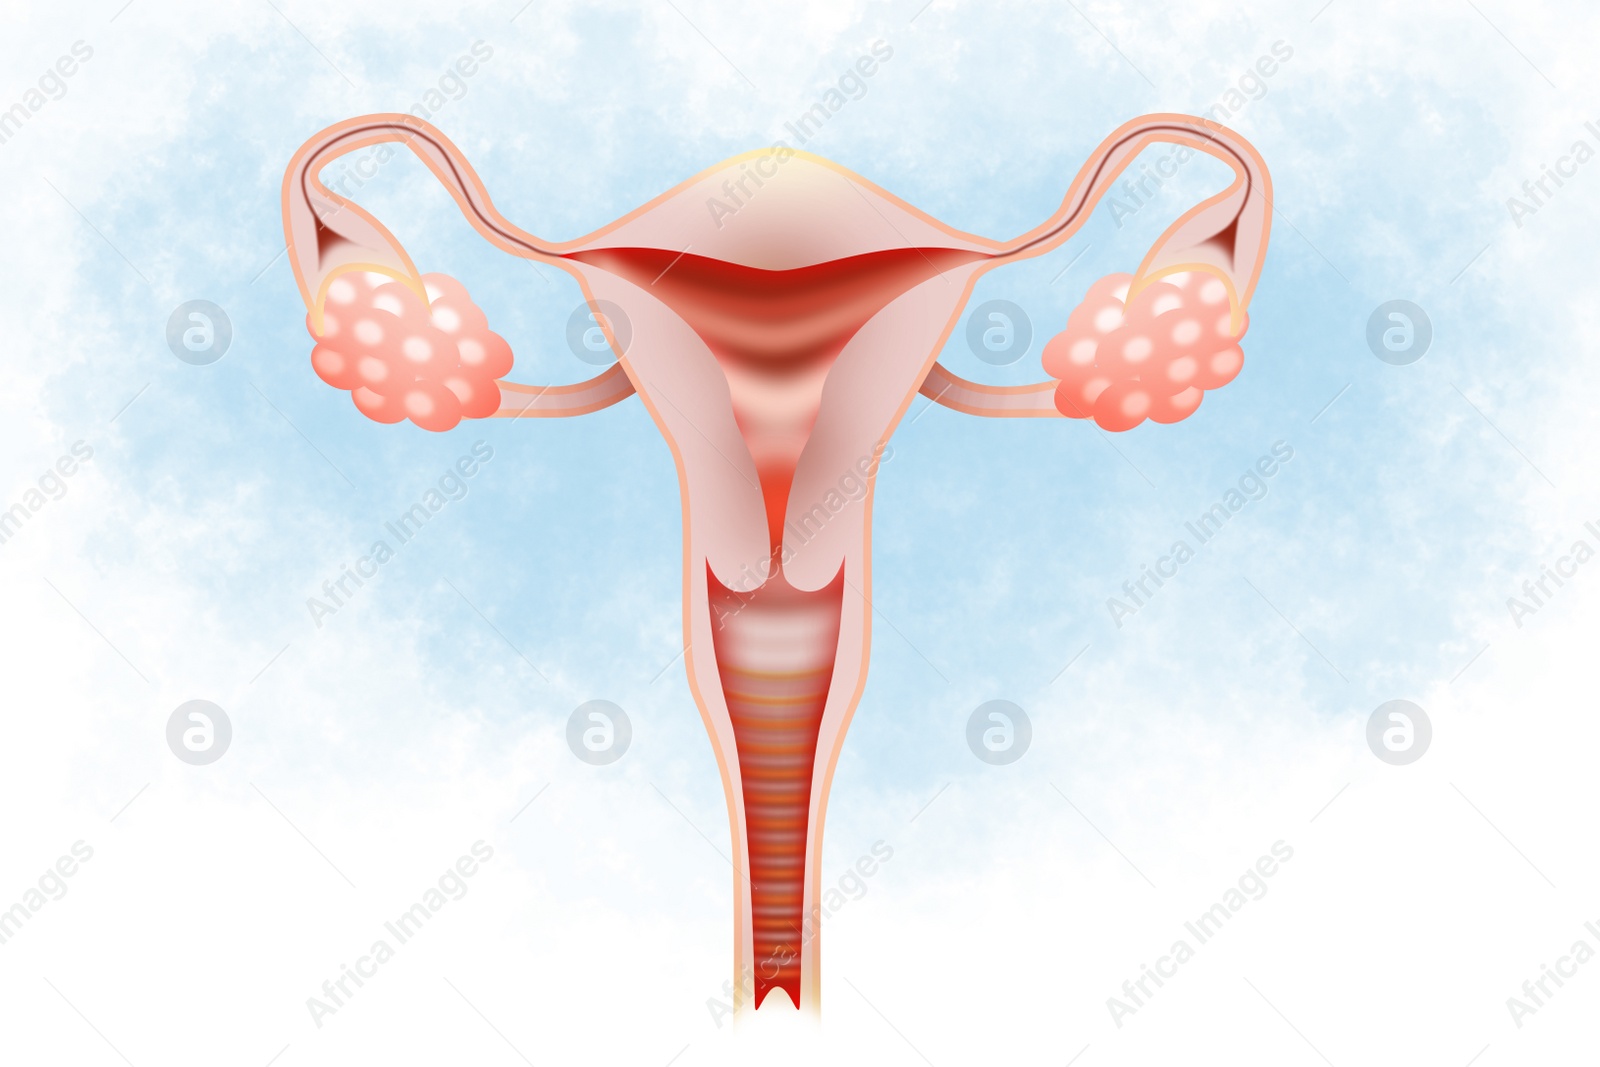 Illustration of  female reproductive system on light background